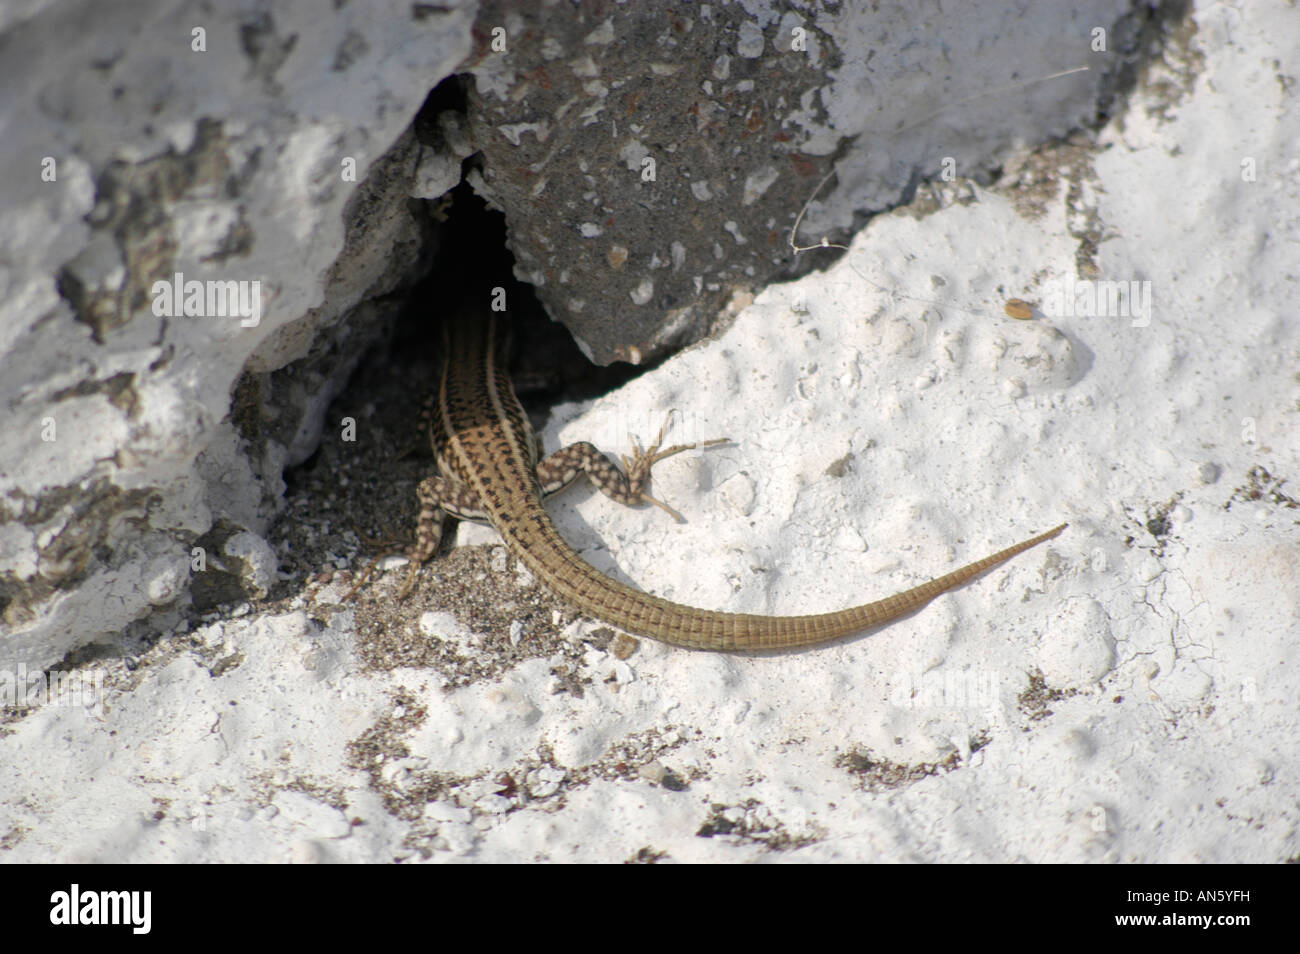 Lizard è prendere il sole sul dipinto di bianco di massa, Grecia. Eidechse sonnt sich auf weiss gekalktem Boden, Griechenland. Foto Stock